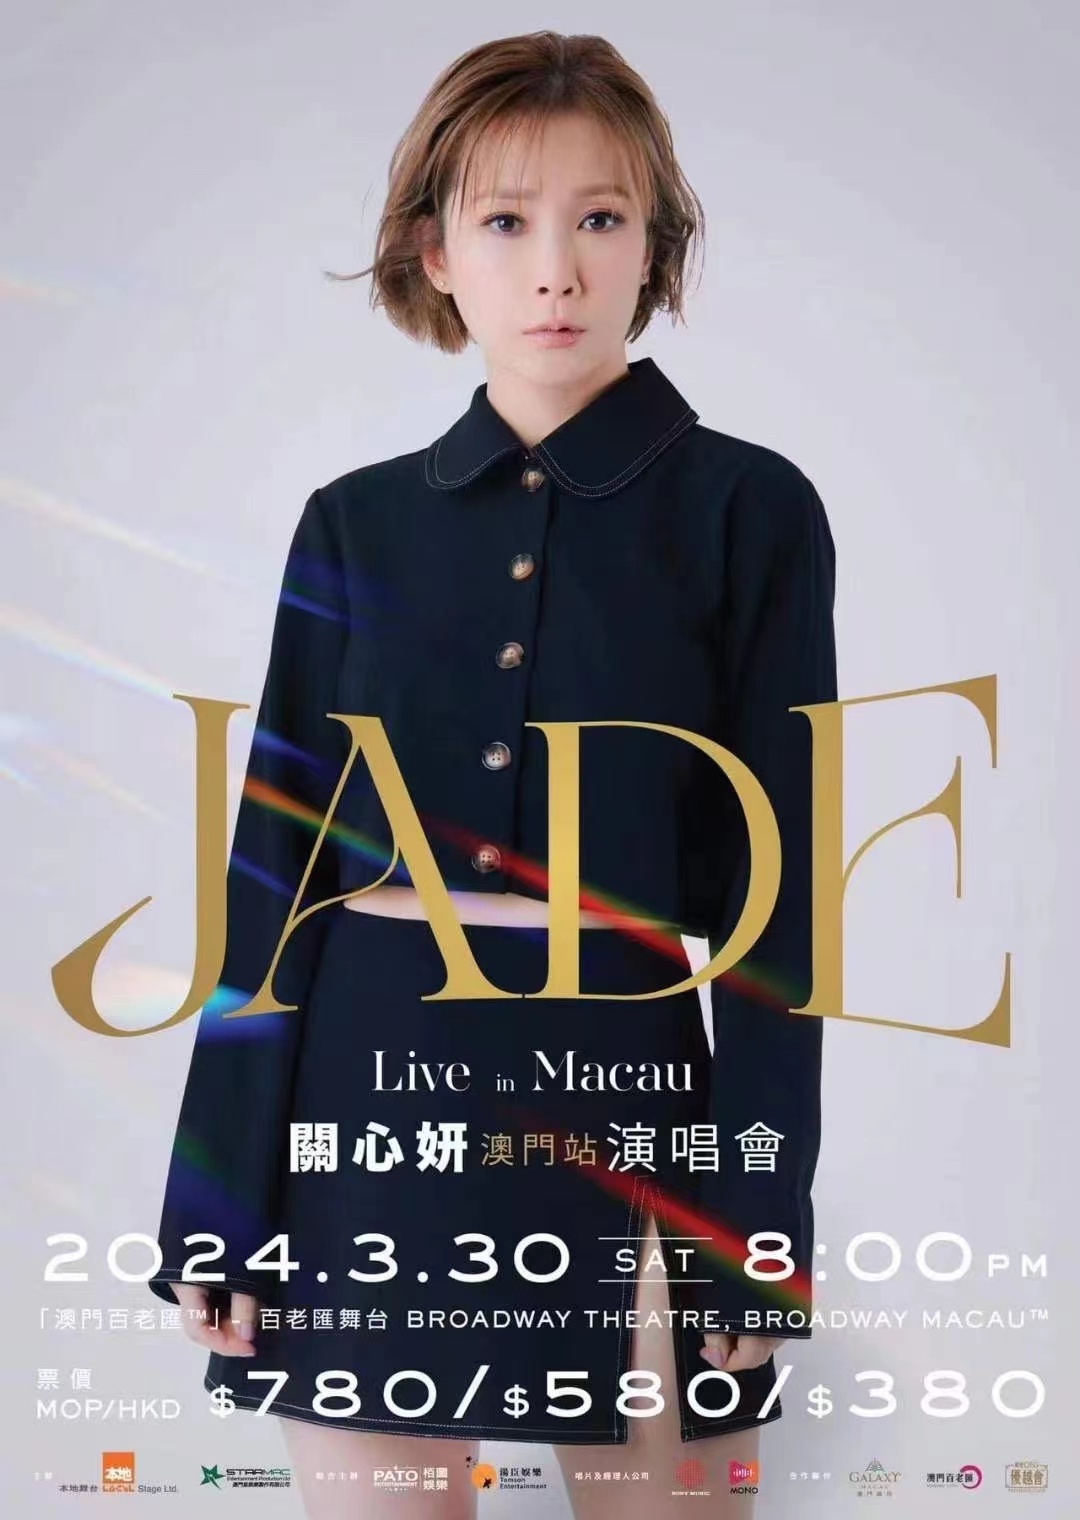 JADE Live in Macau 关心妍澳门站演唱会